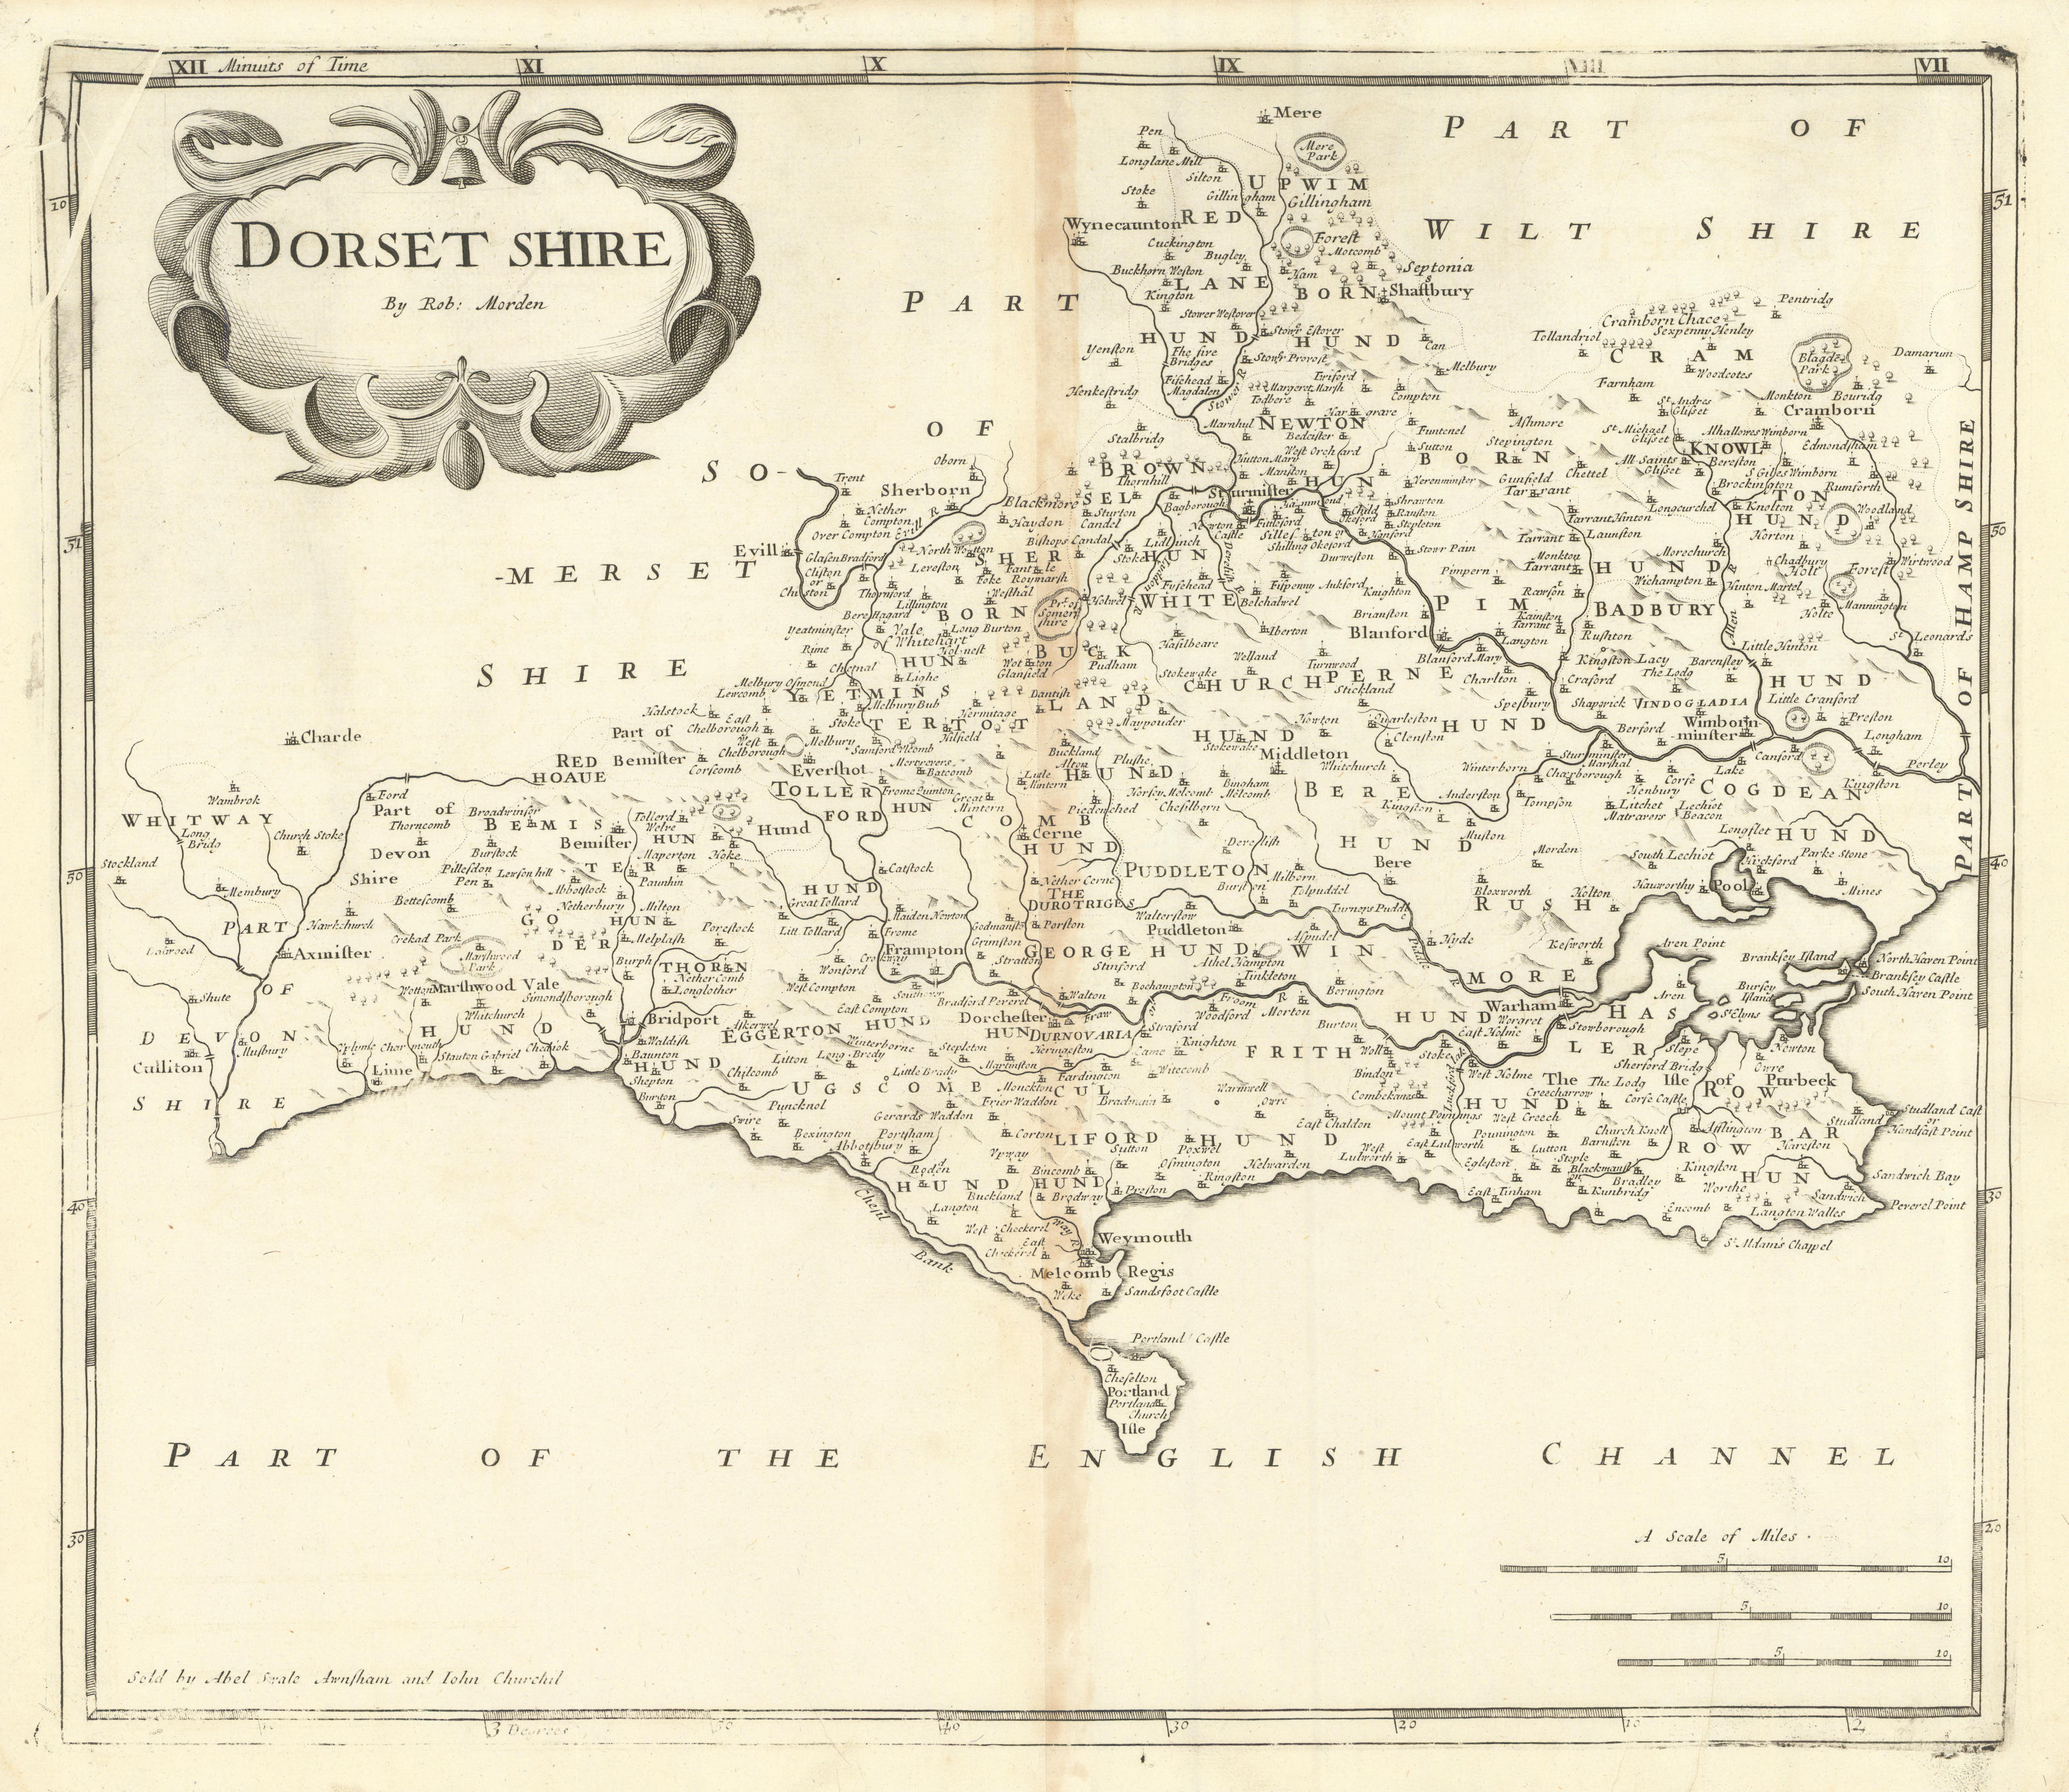 Associate Product Dorset. 'DORSET SHIRE' by ROBERT MORDEN from Camden's Britannia 1695 old map